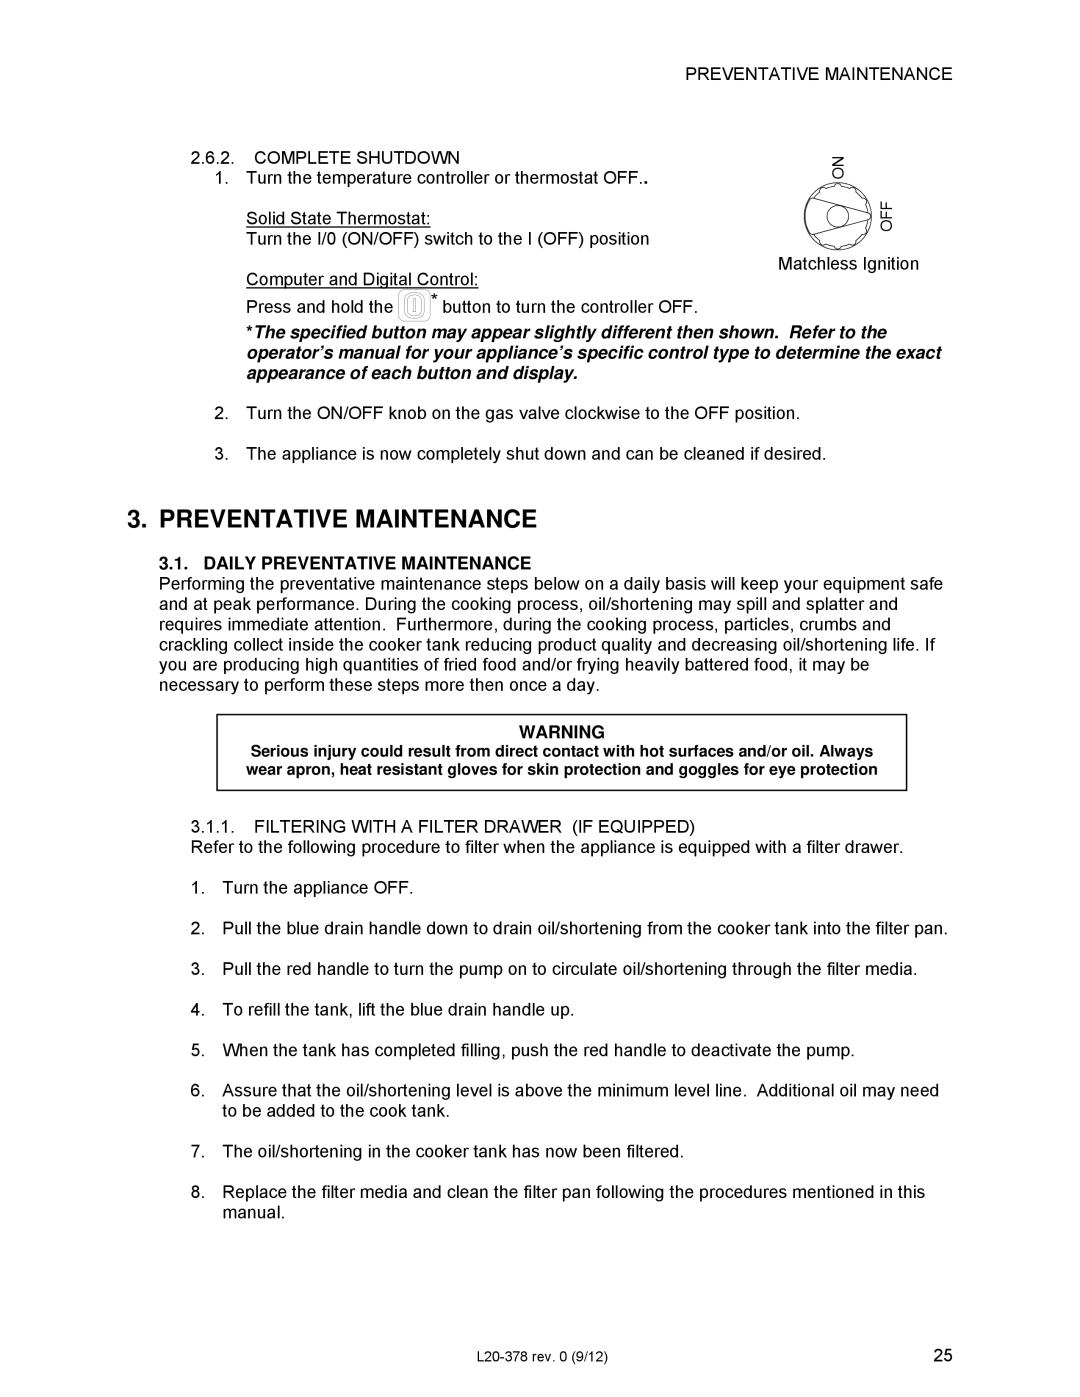 Pitco Frialator L20-378 operation manual Preventative Maintenance Complete Shutdown, Daily Preventative Maintenance 